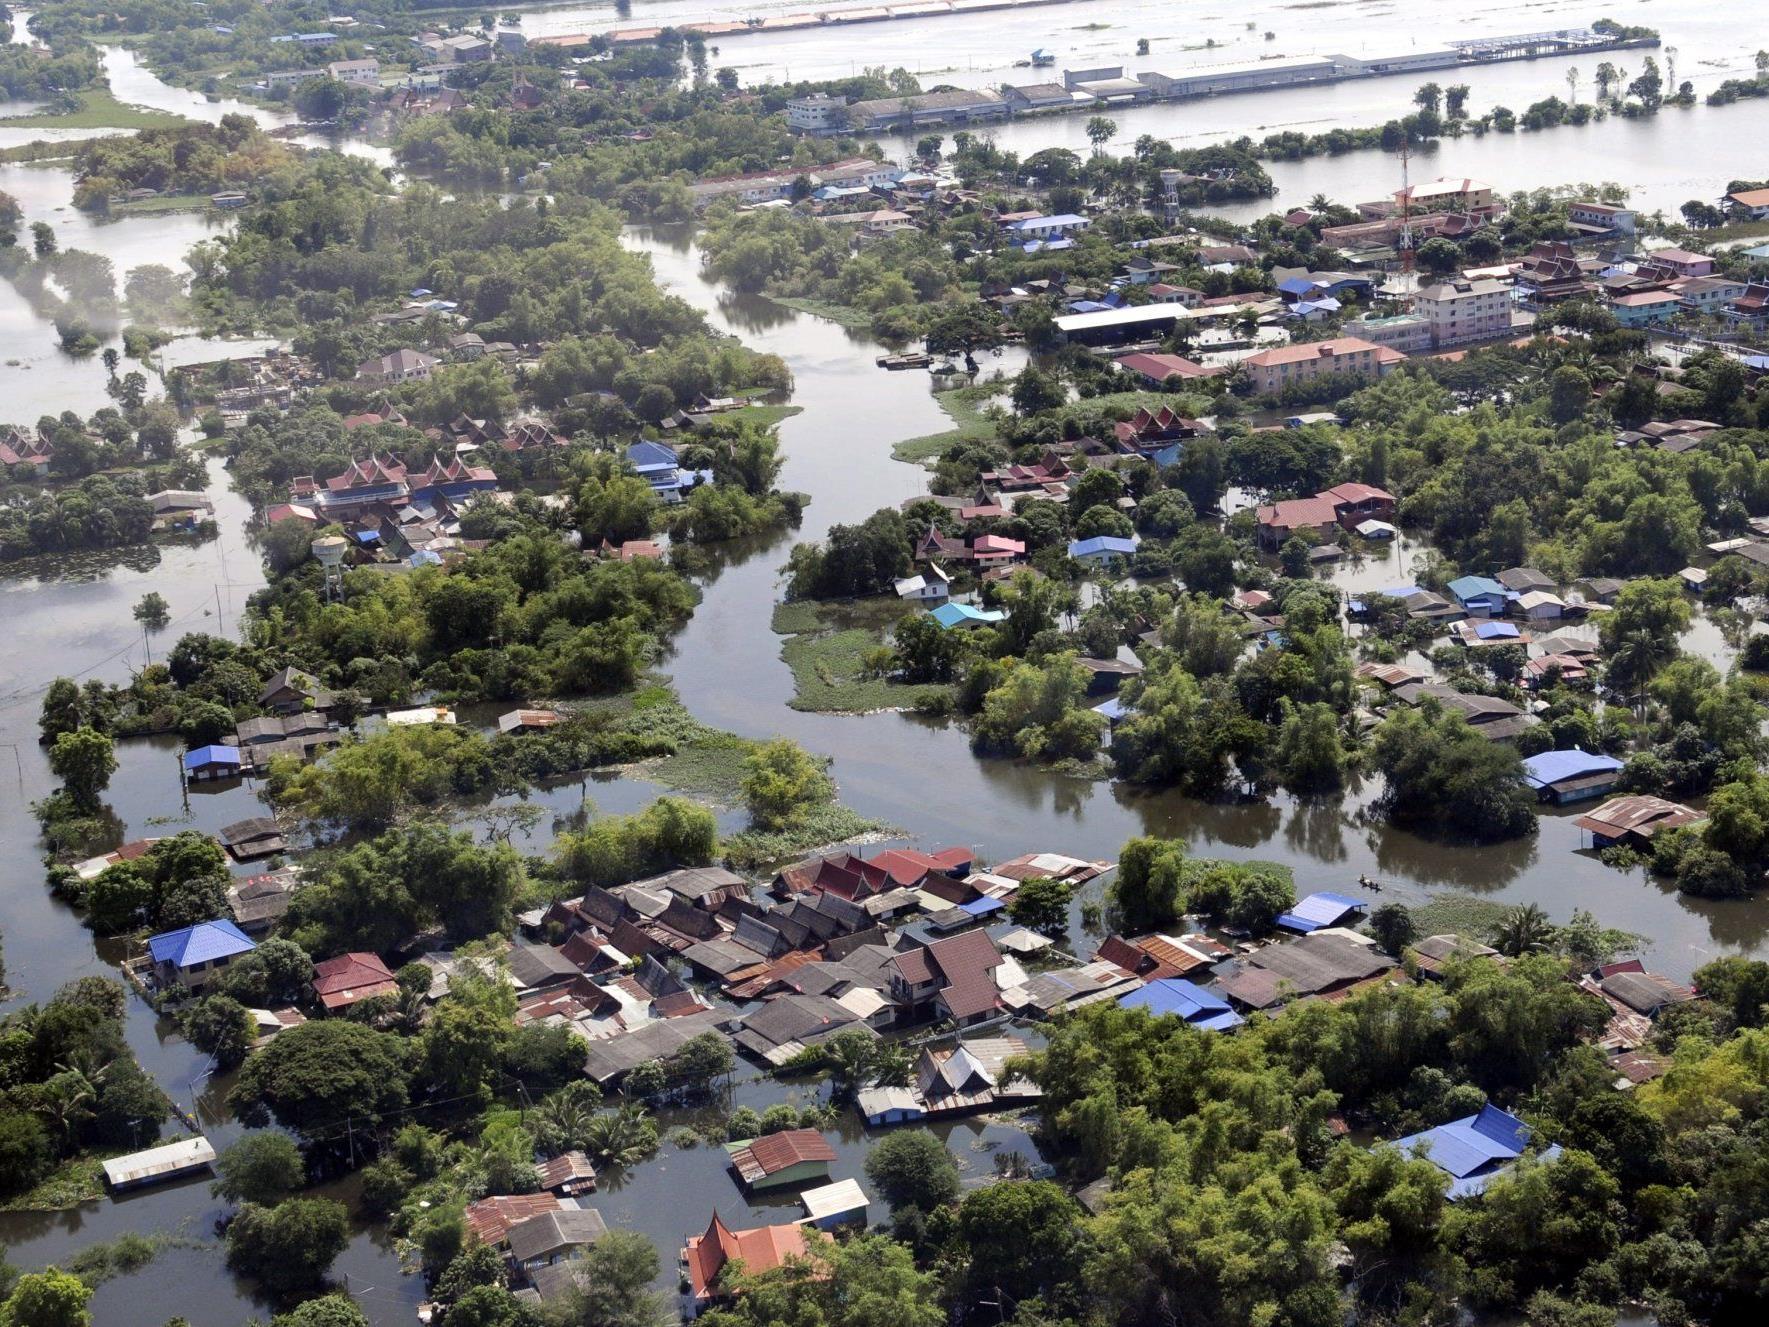 ie Fluten nach heftigen Monsunregen forderten bereits 300 Leben